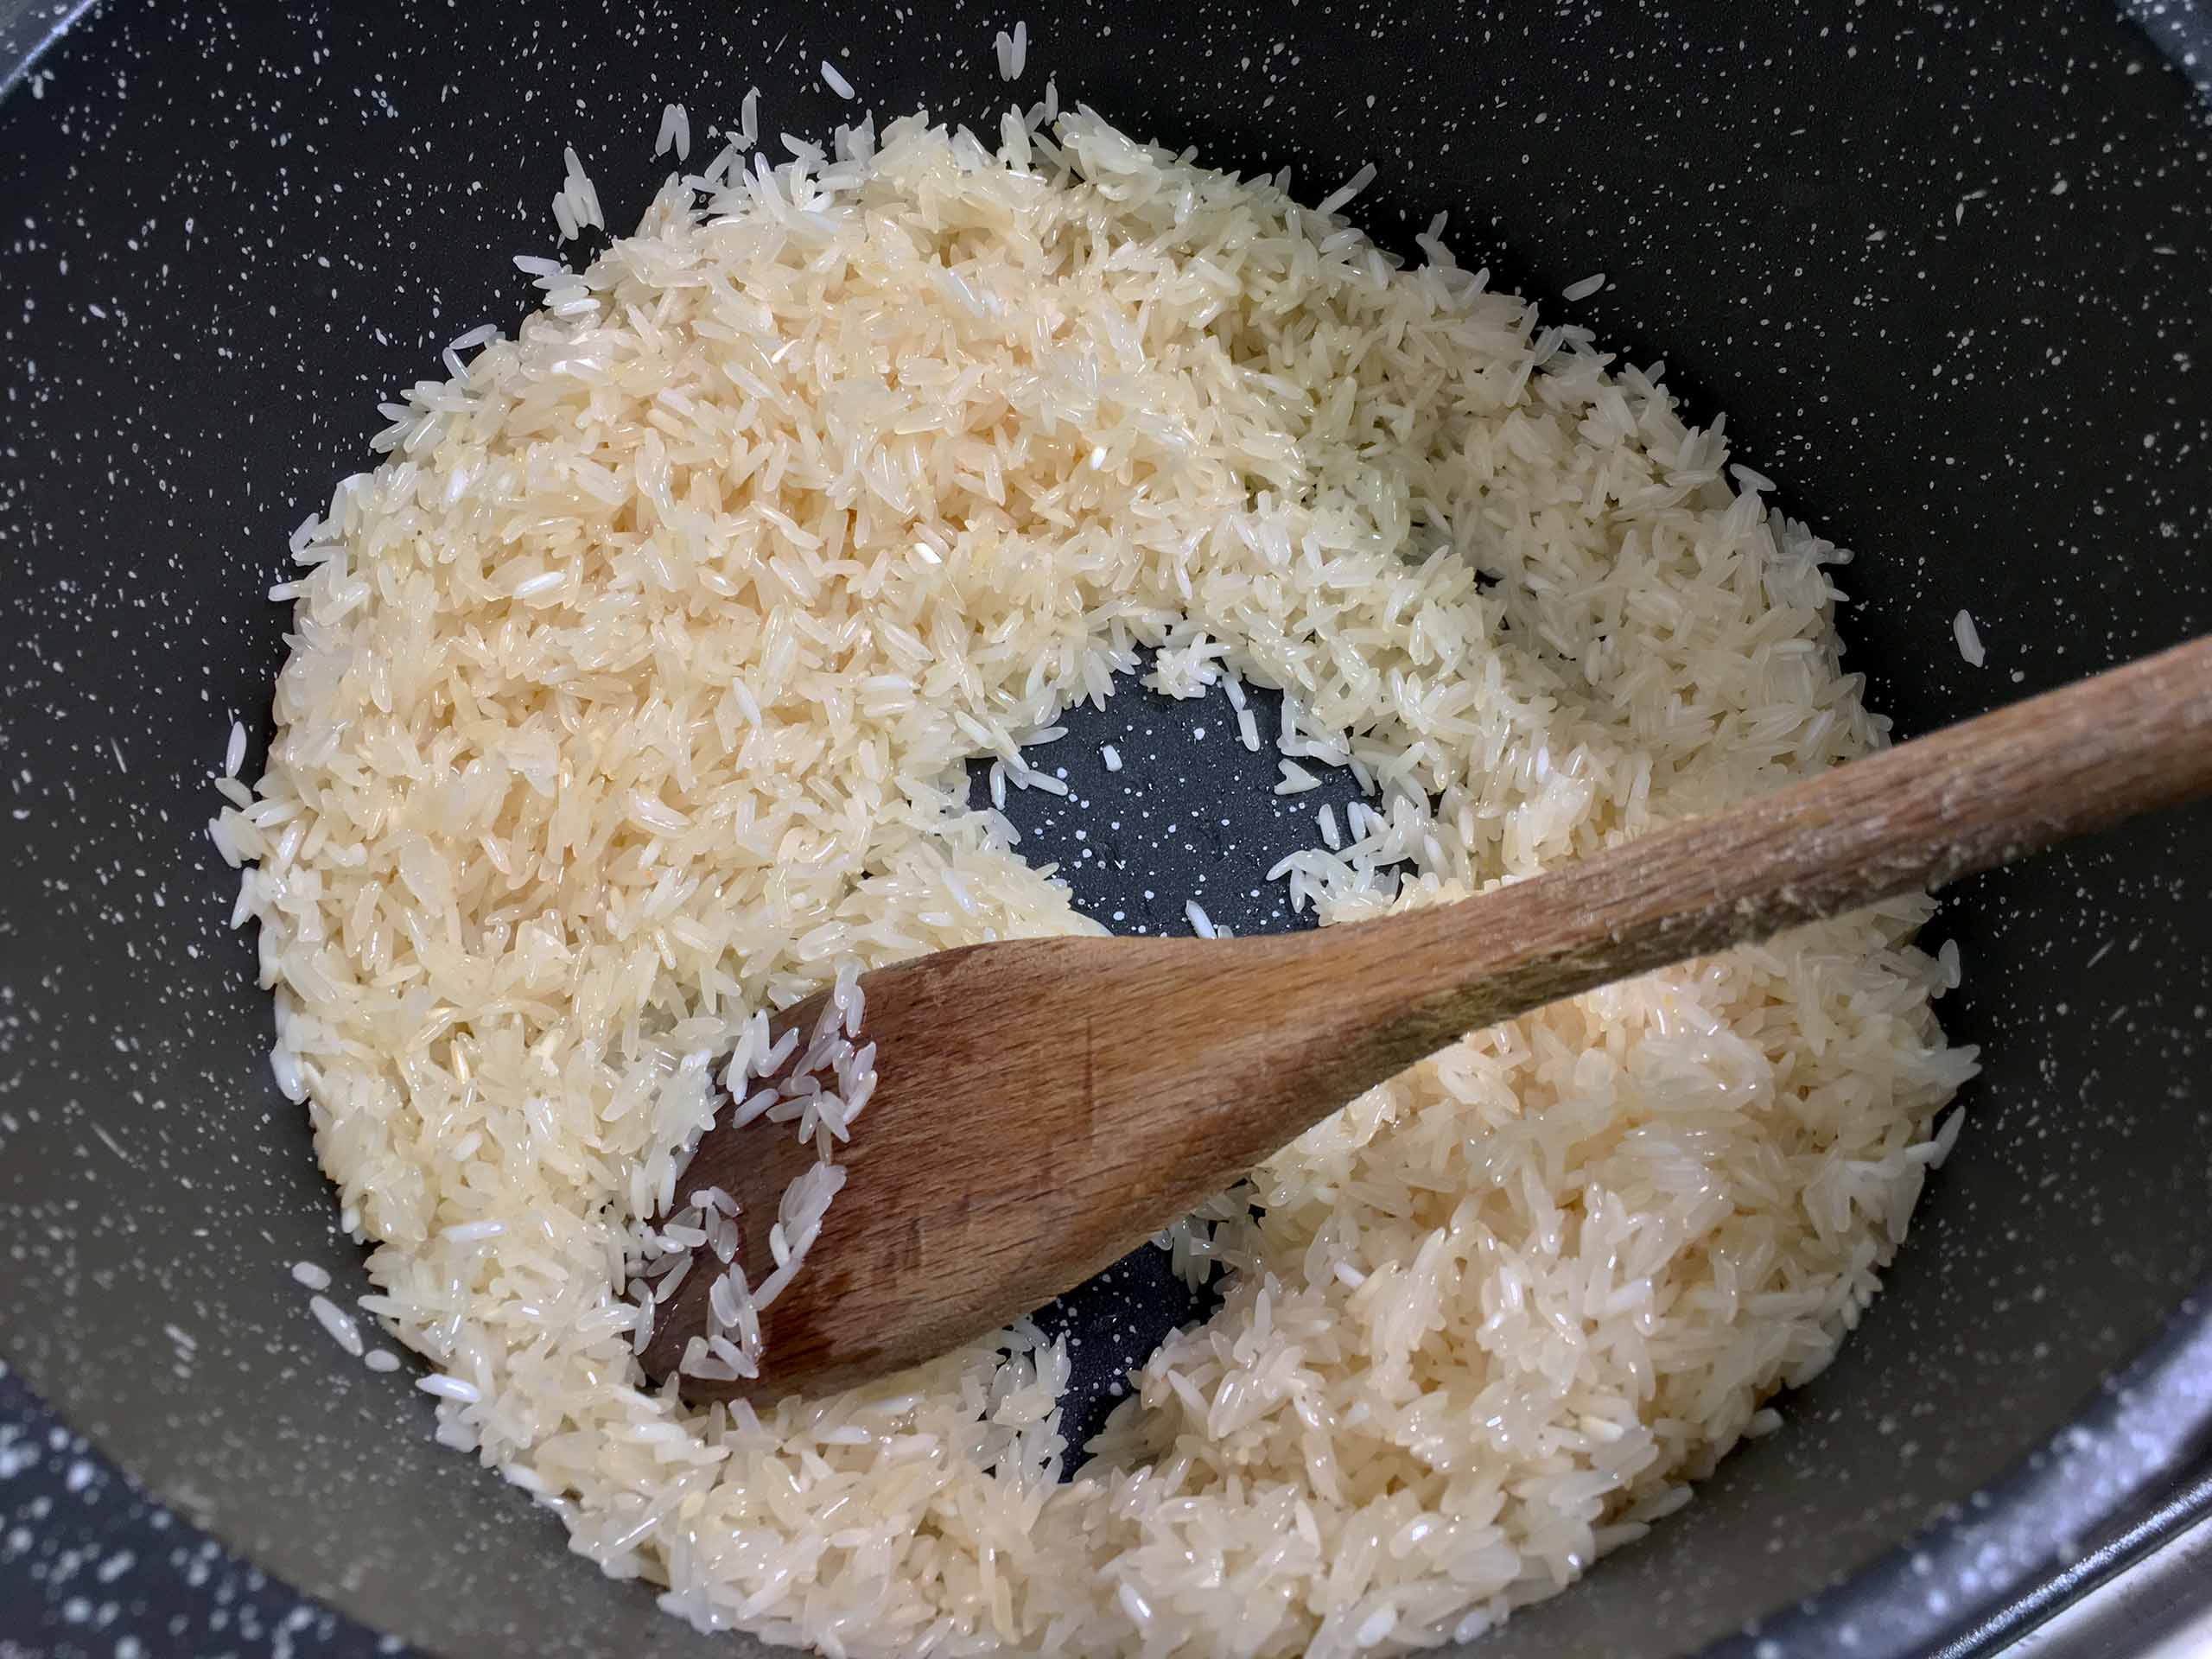 Stir fry the rice